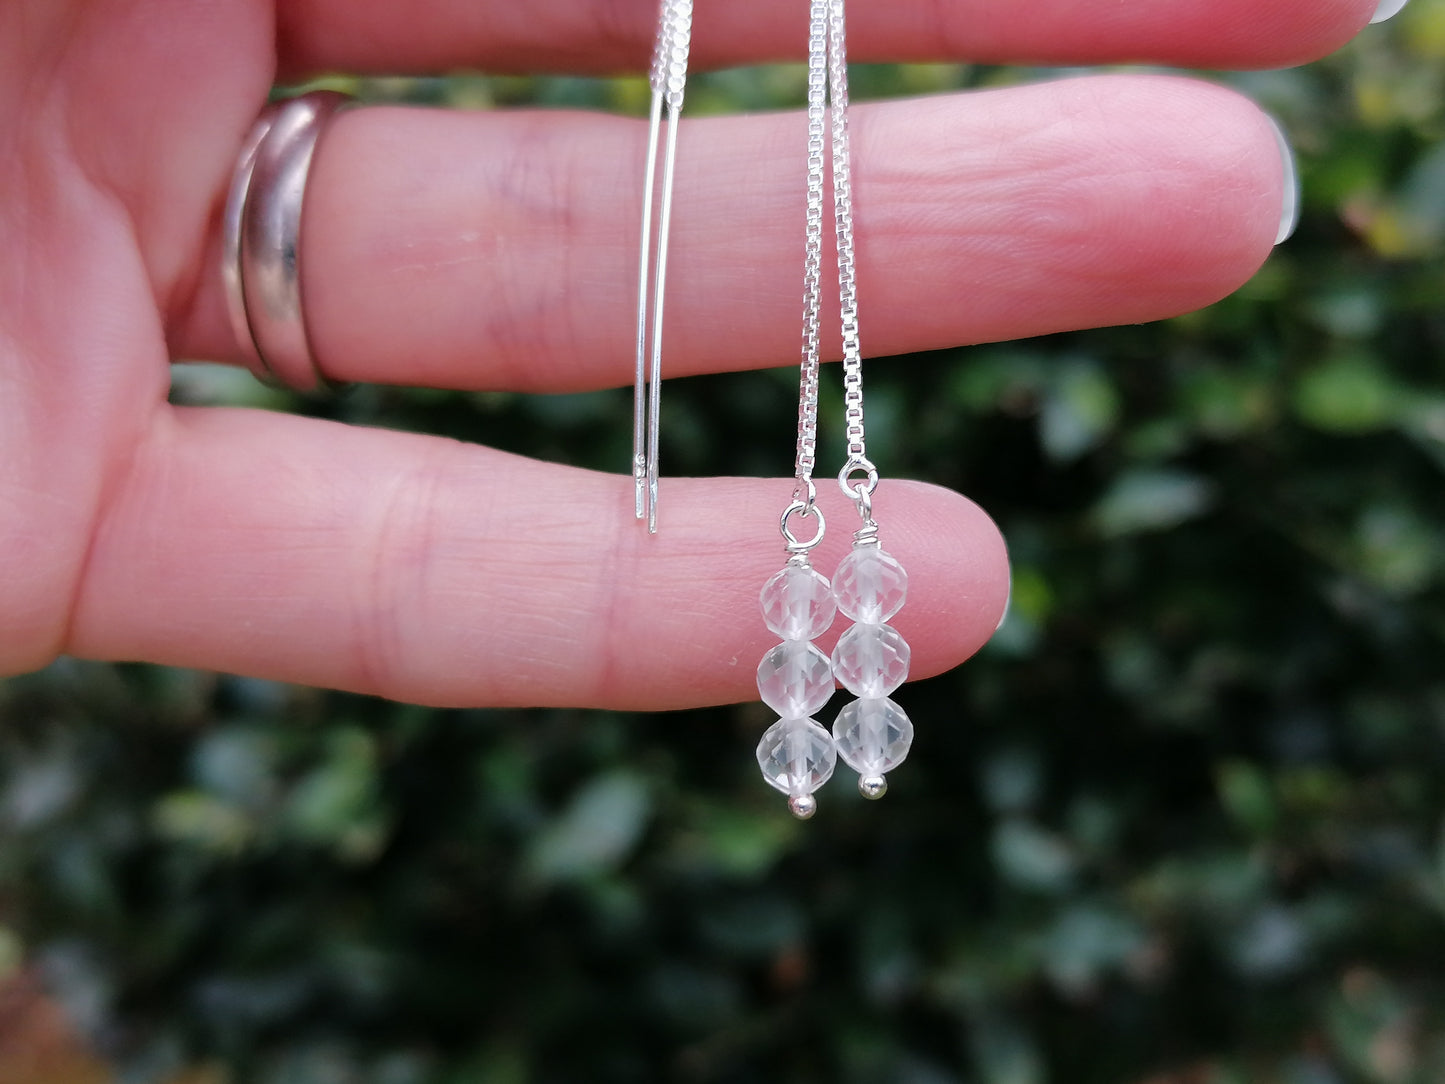 Crystal quartz threader earrings in sterling silver. April birthstone earrings.